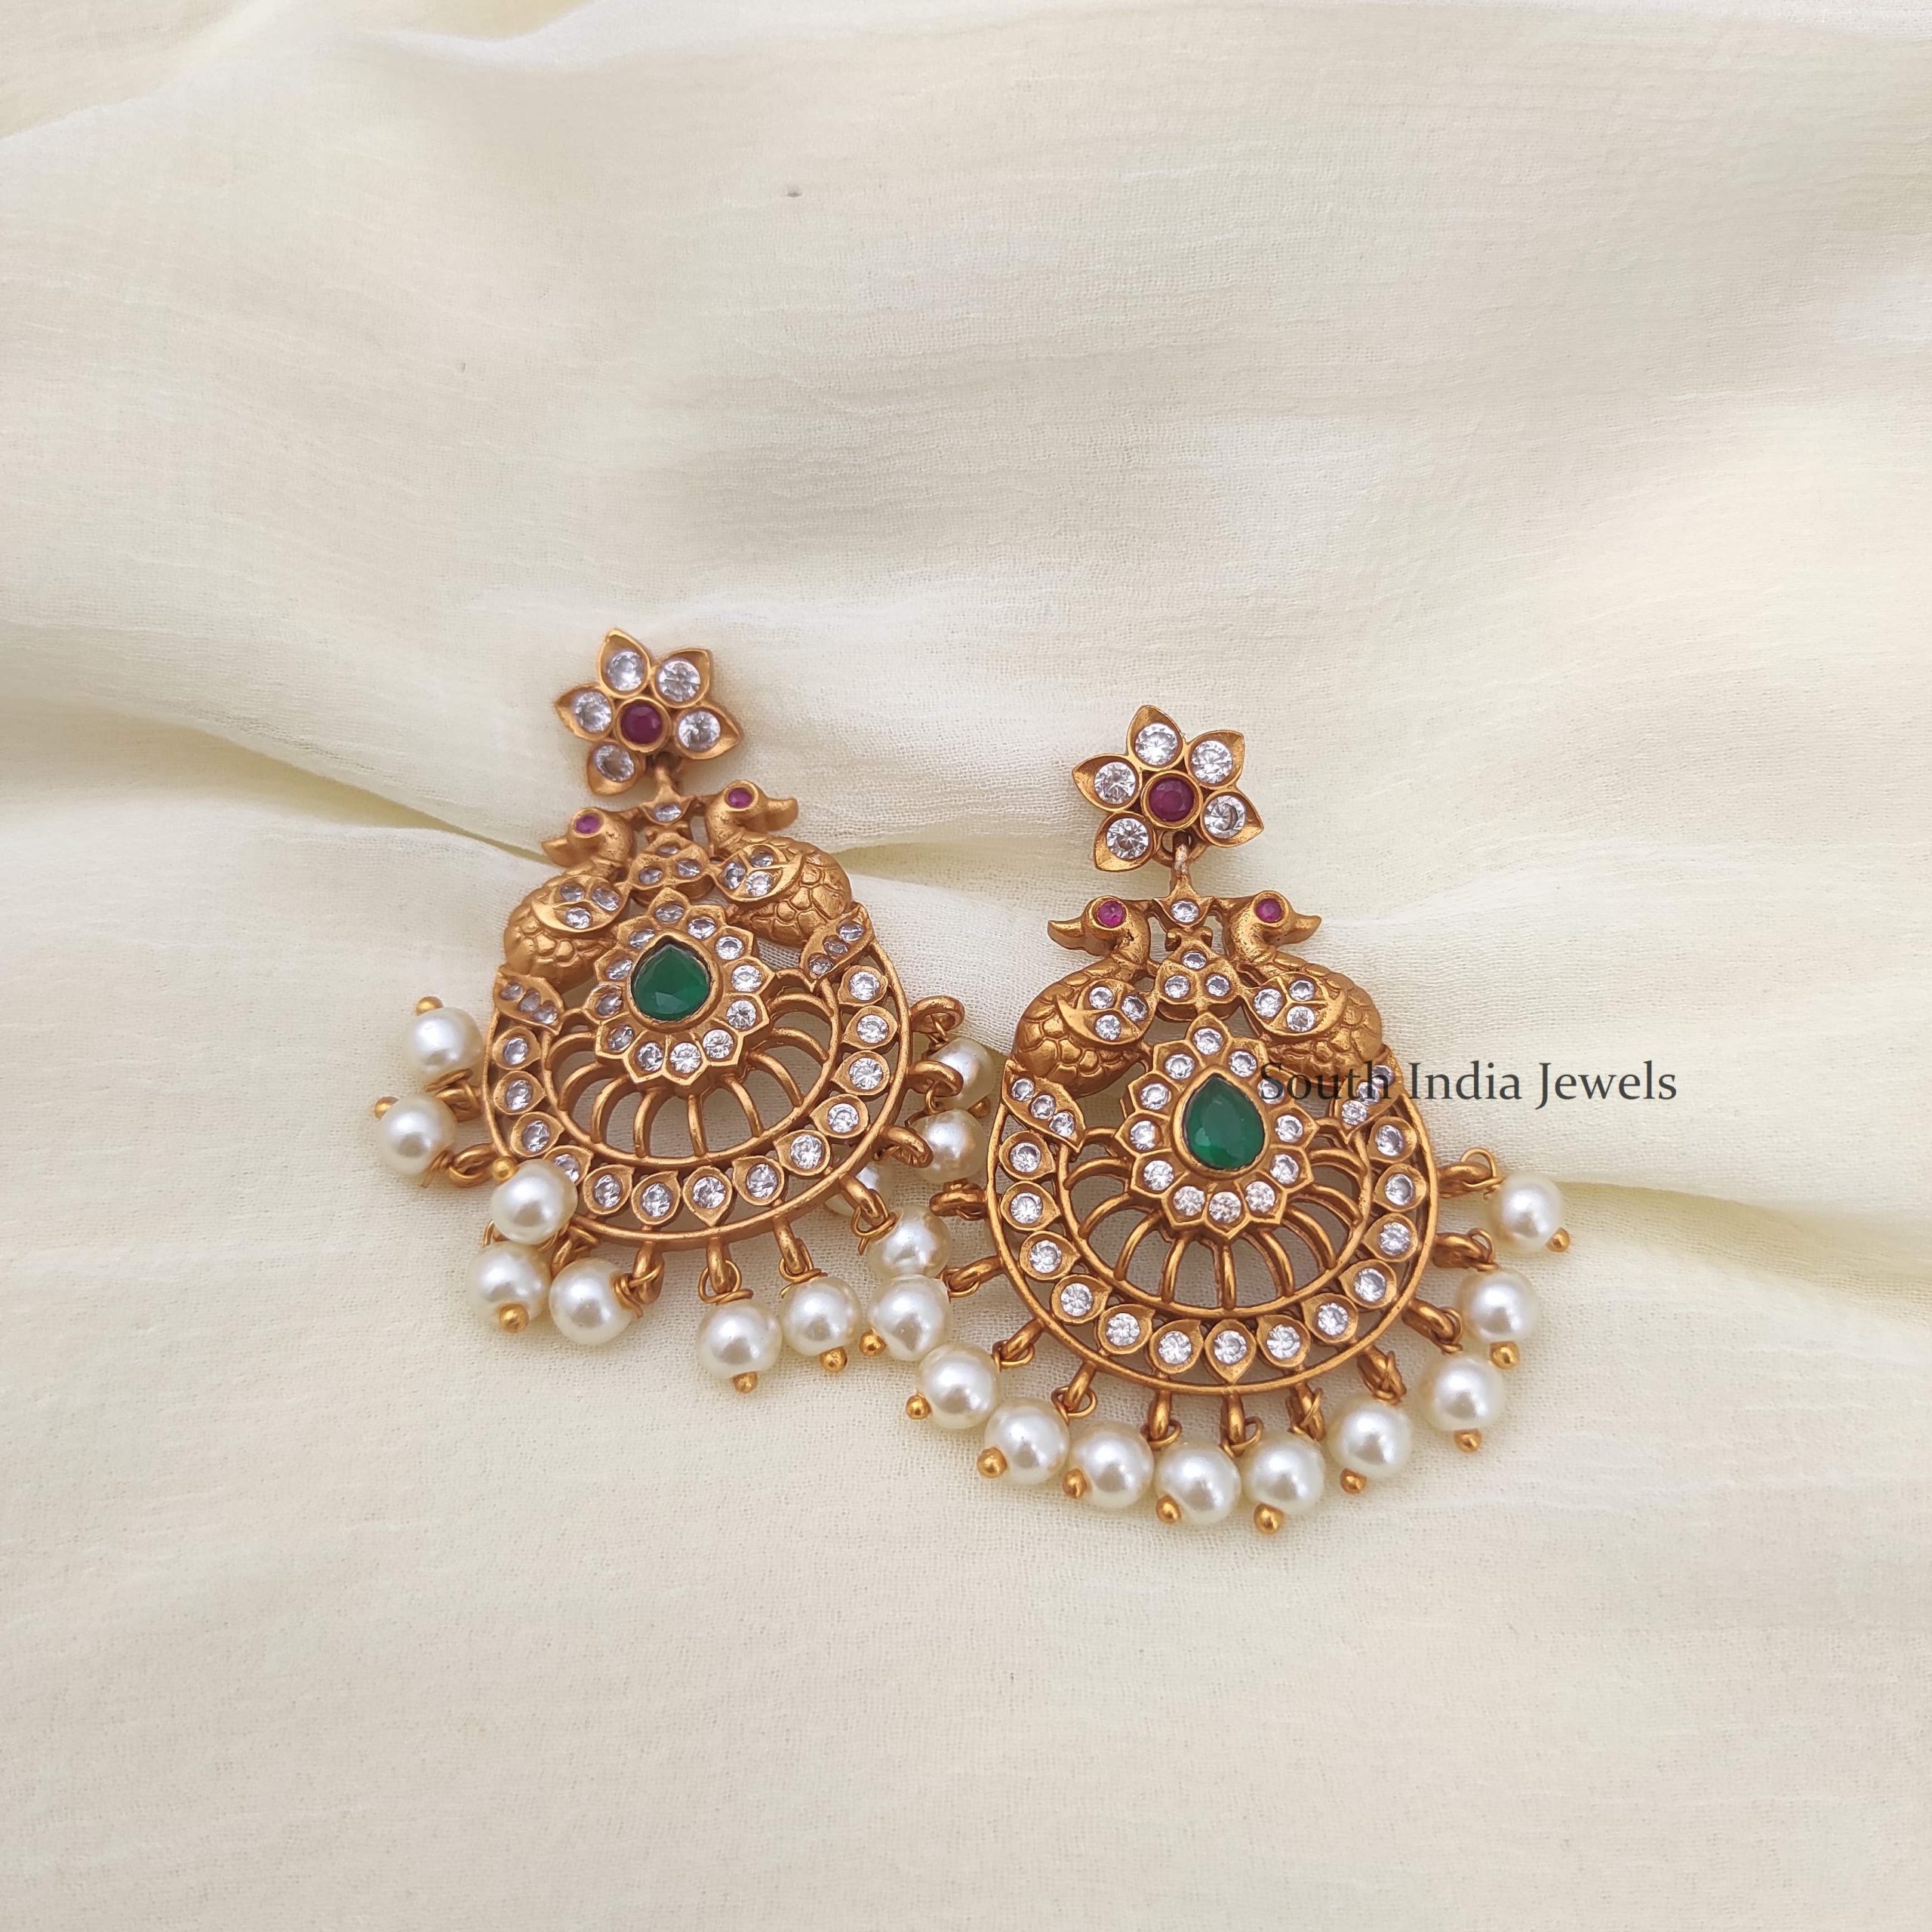 Chandbali Earrings | Best Jewellers In India - South India Jewels